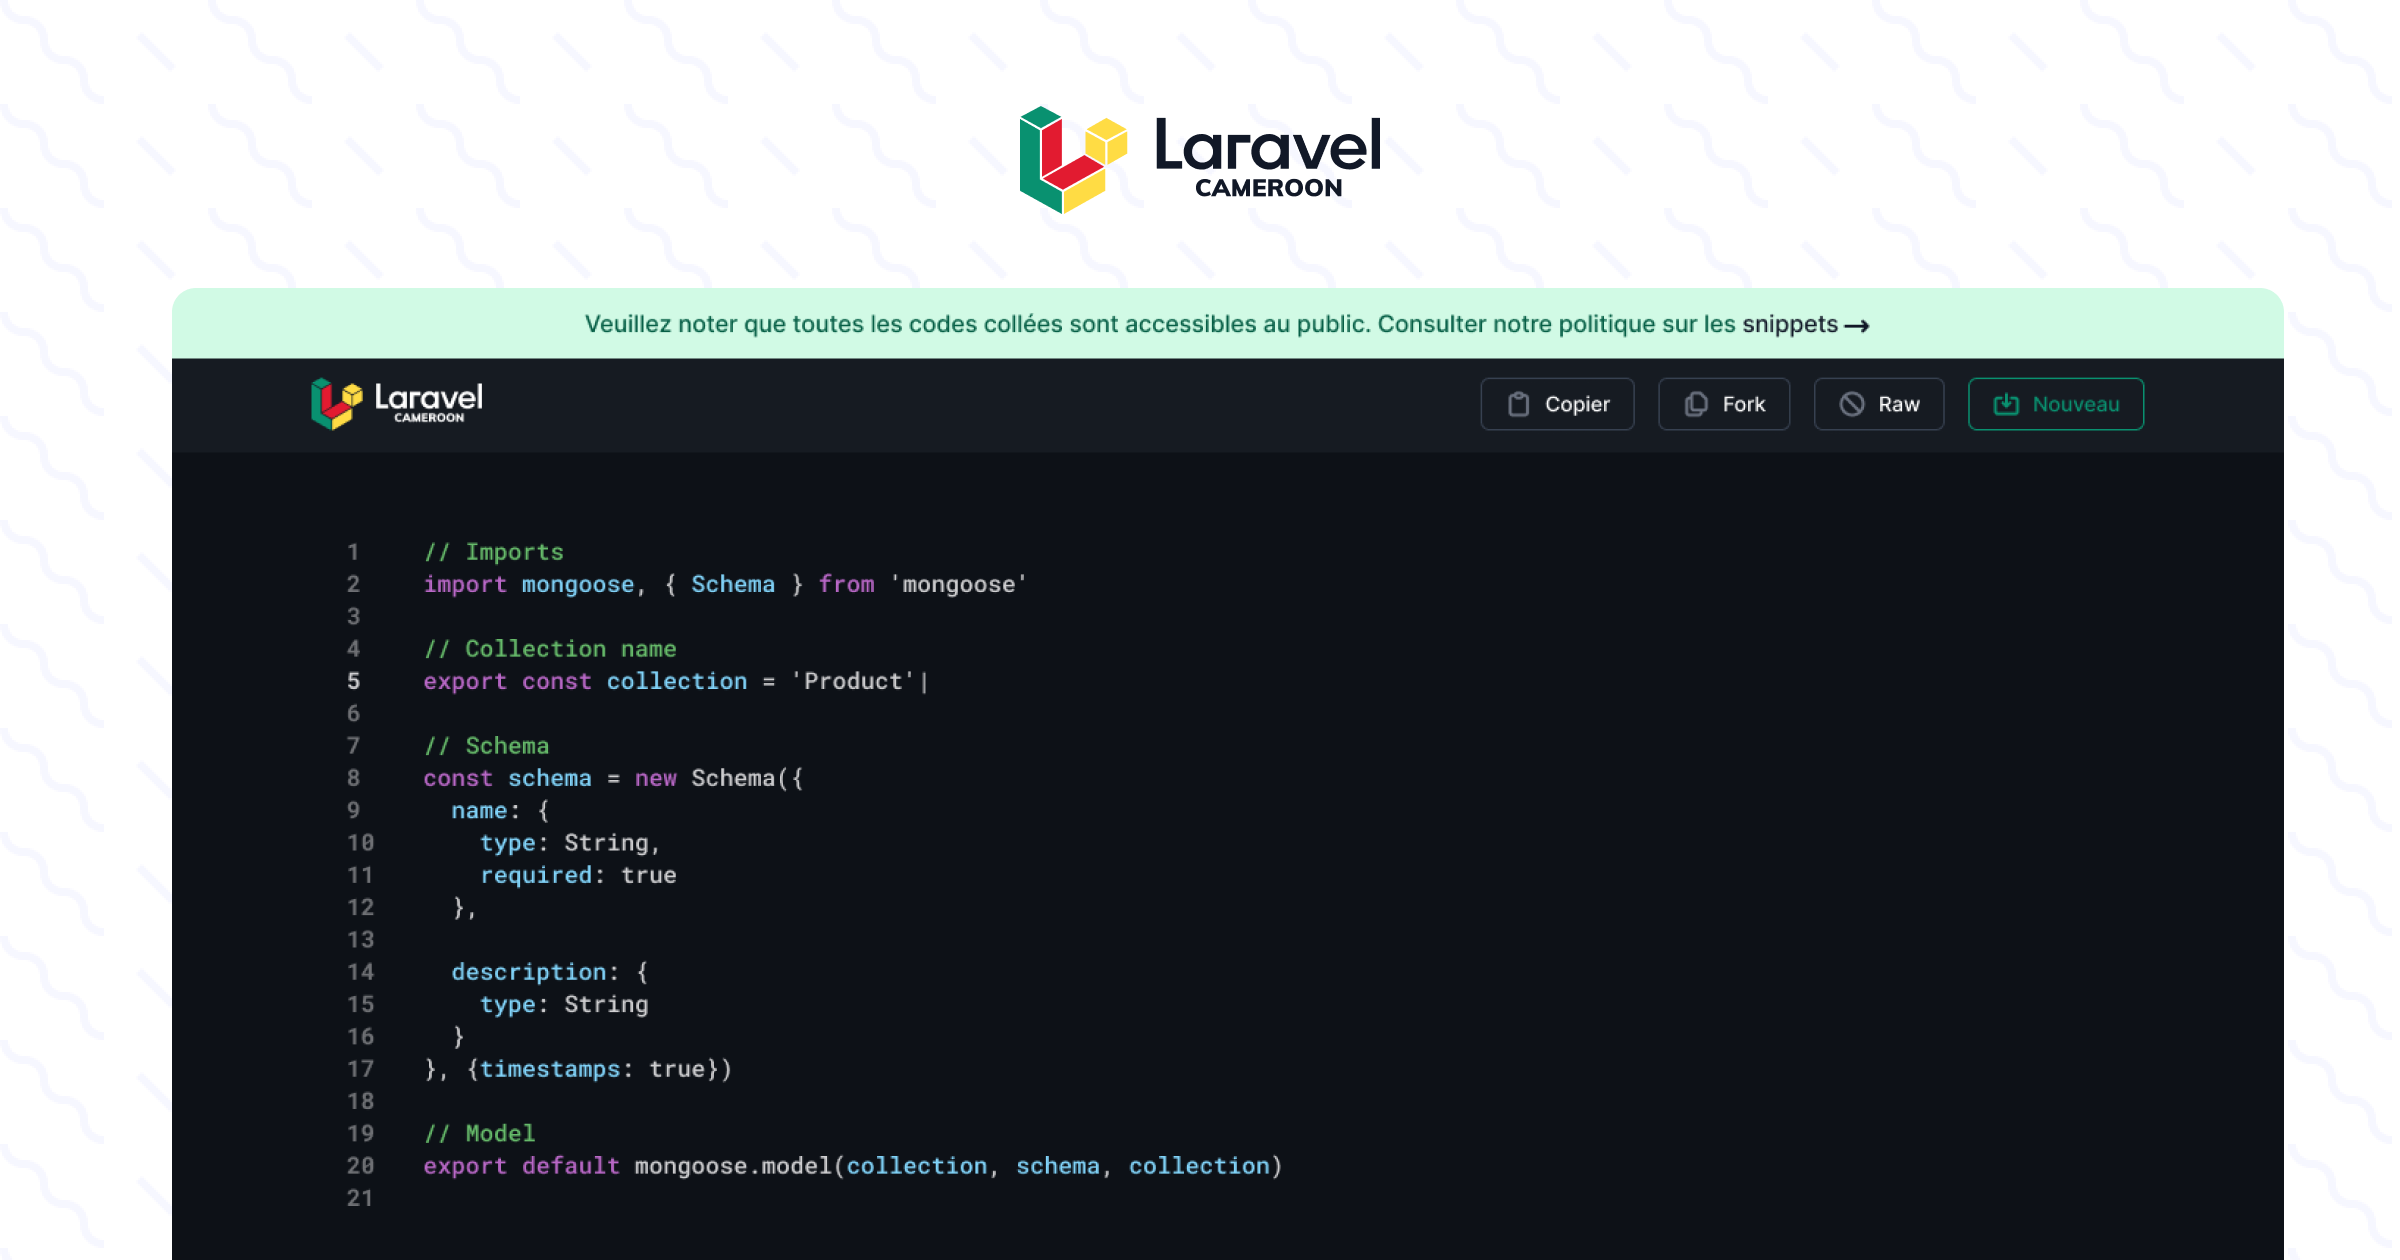 laravel-cameroun-code-snippets